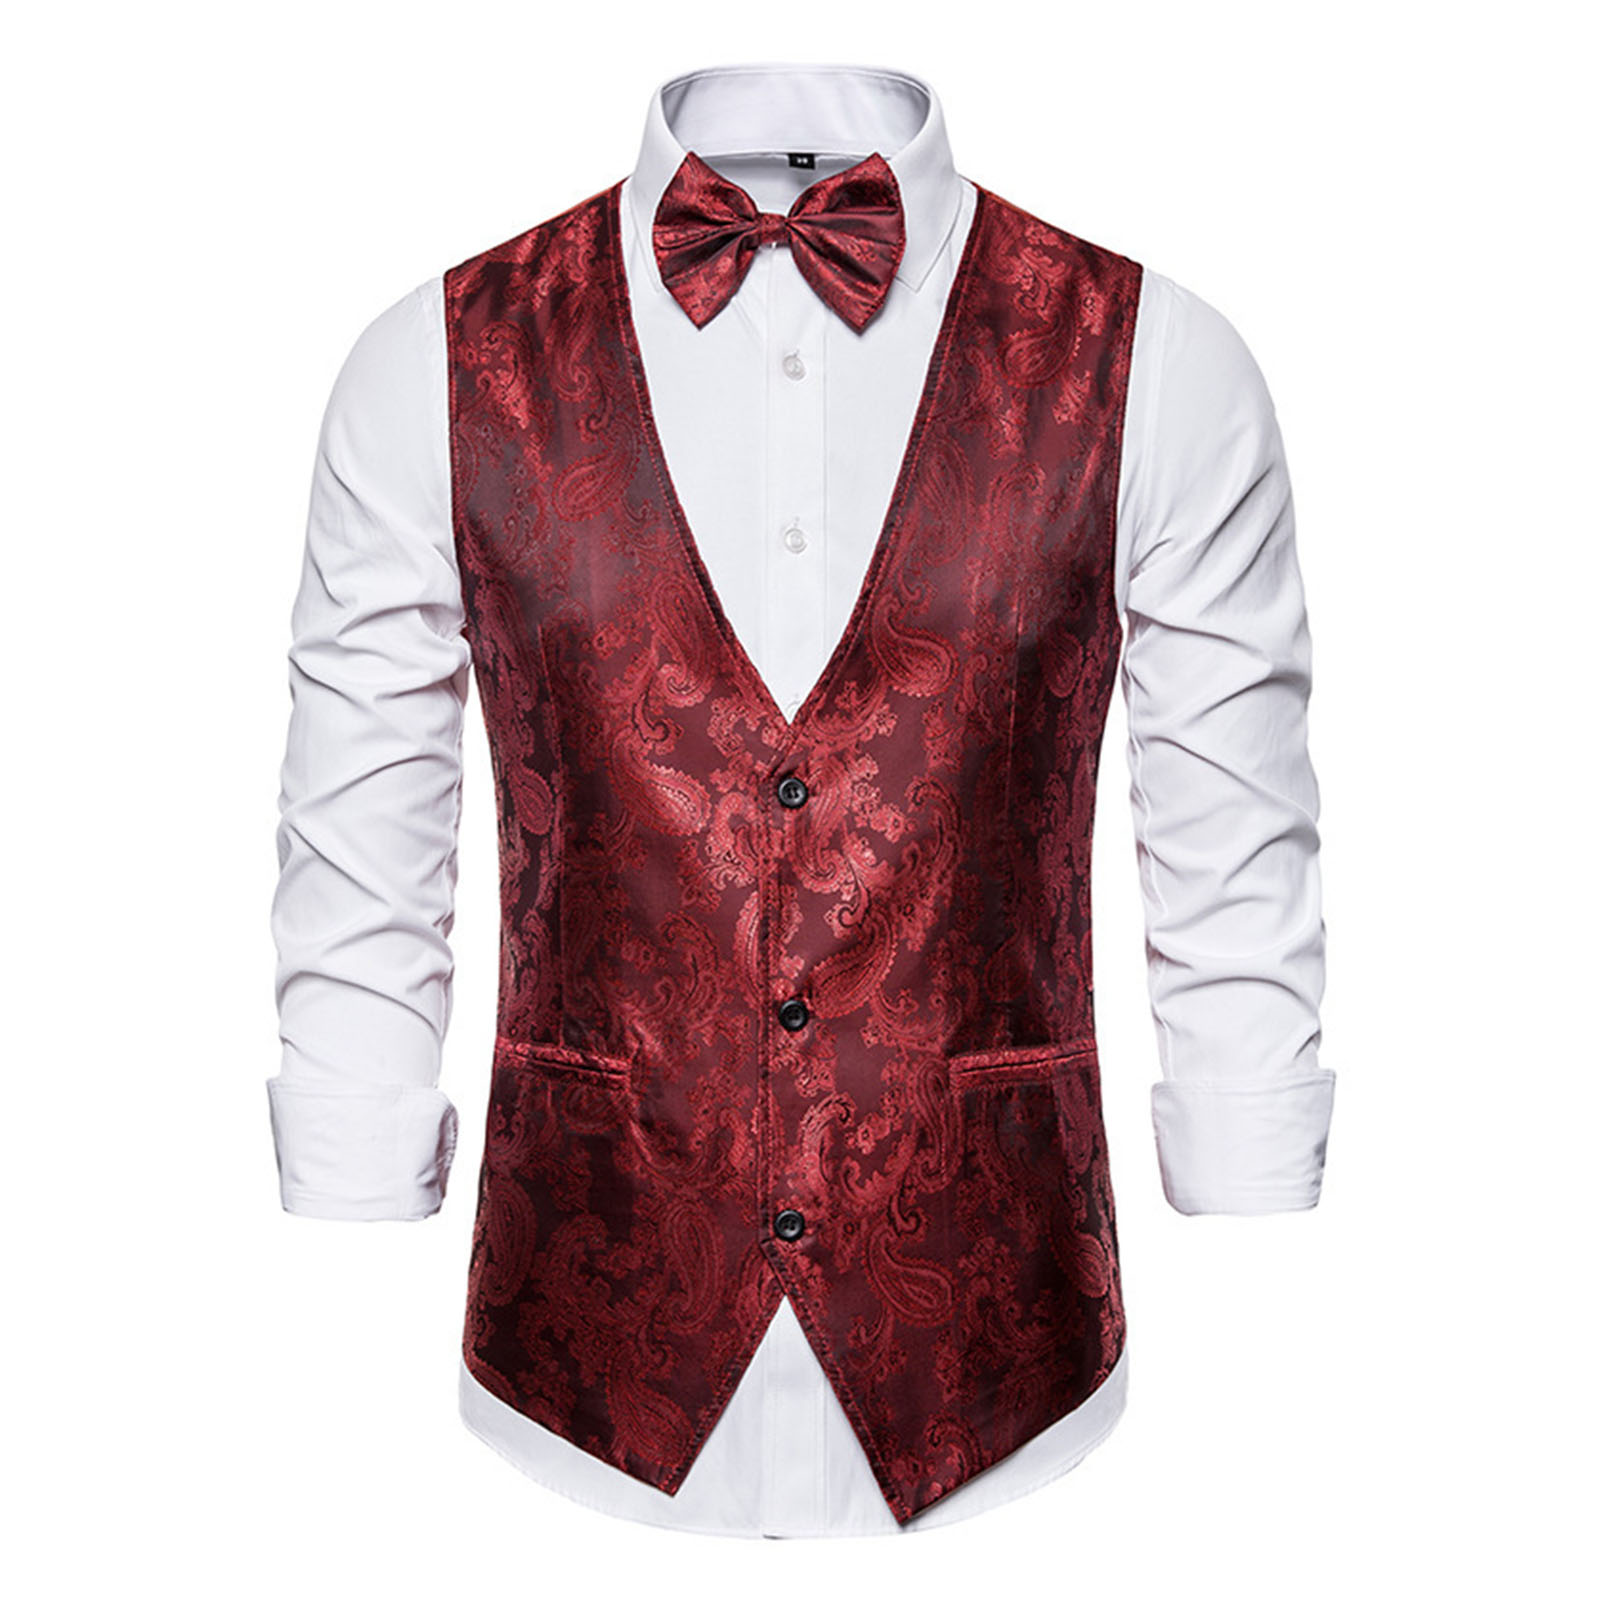 Bullker Men Suit Vest Emcee Vest Men s Vintage Print Suit Vest Perfect for